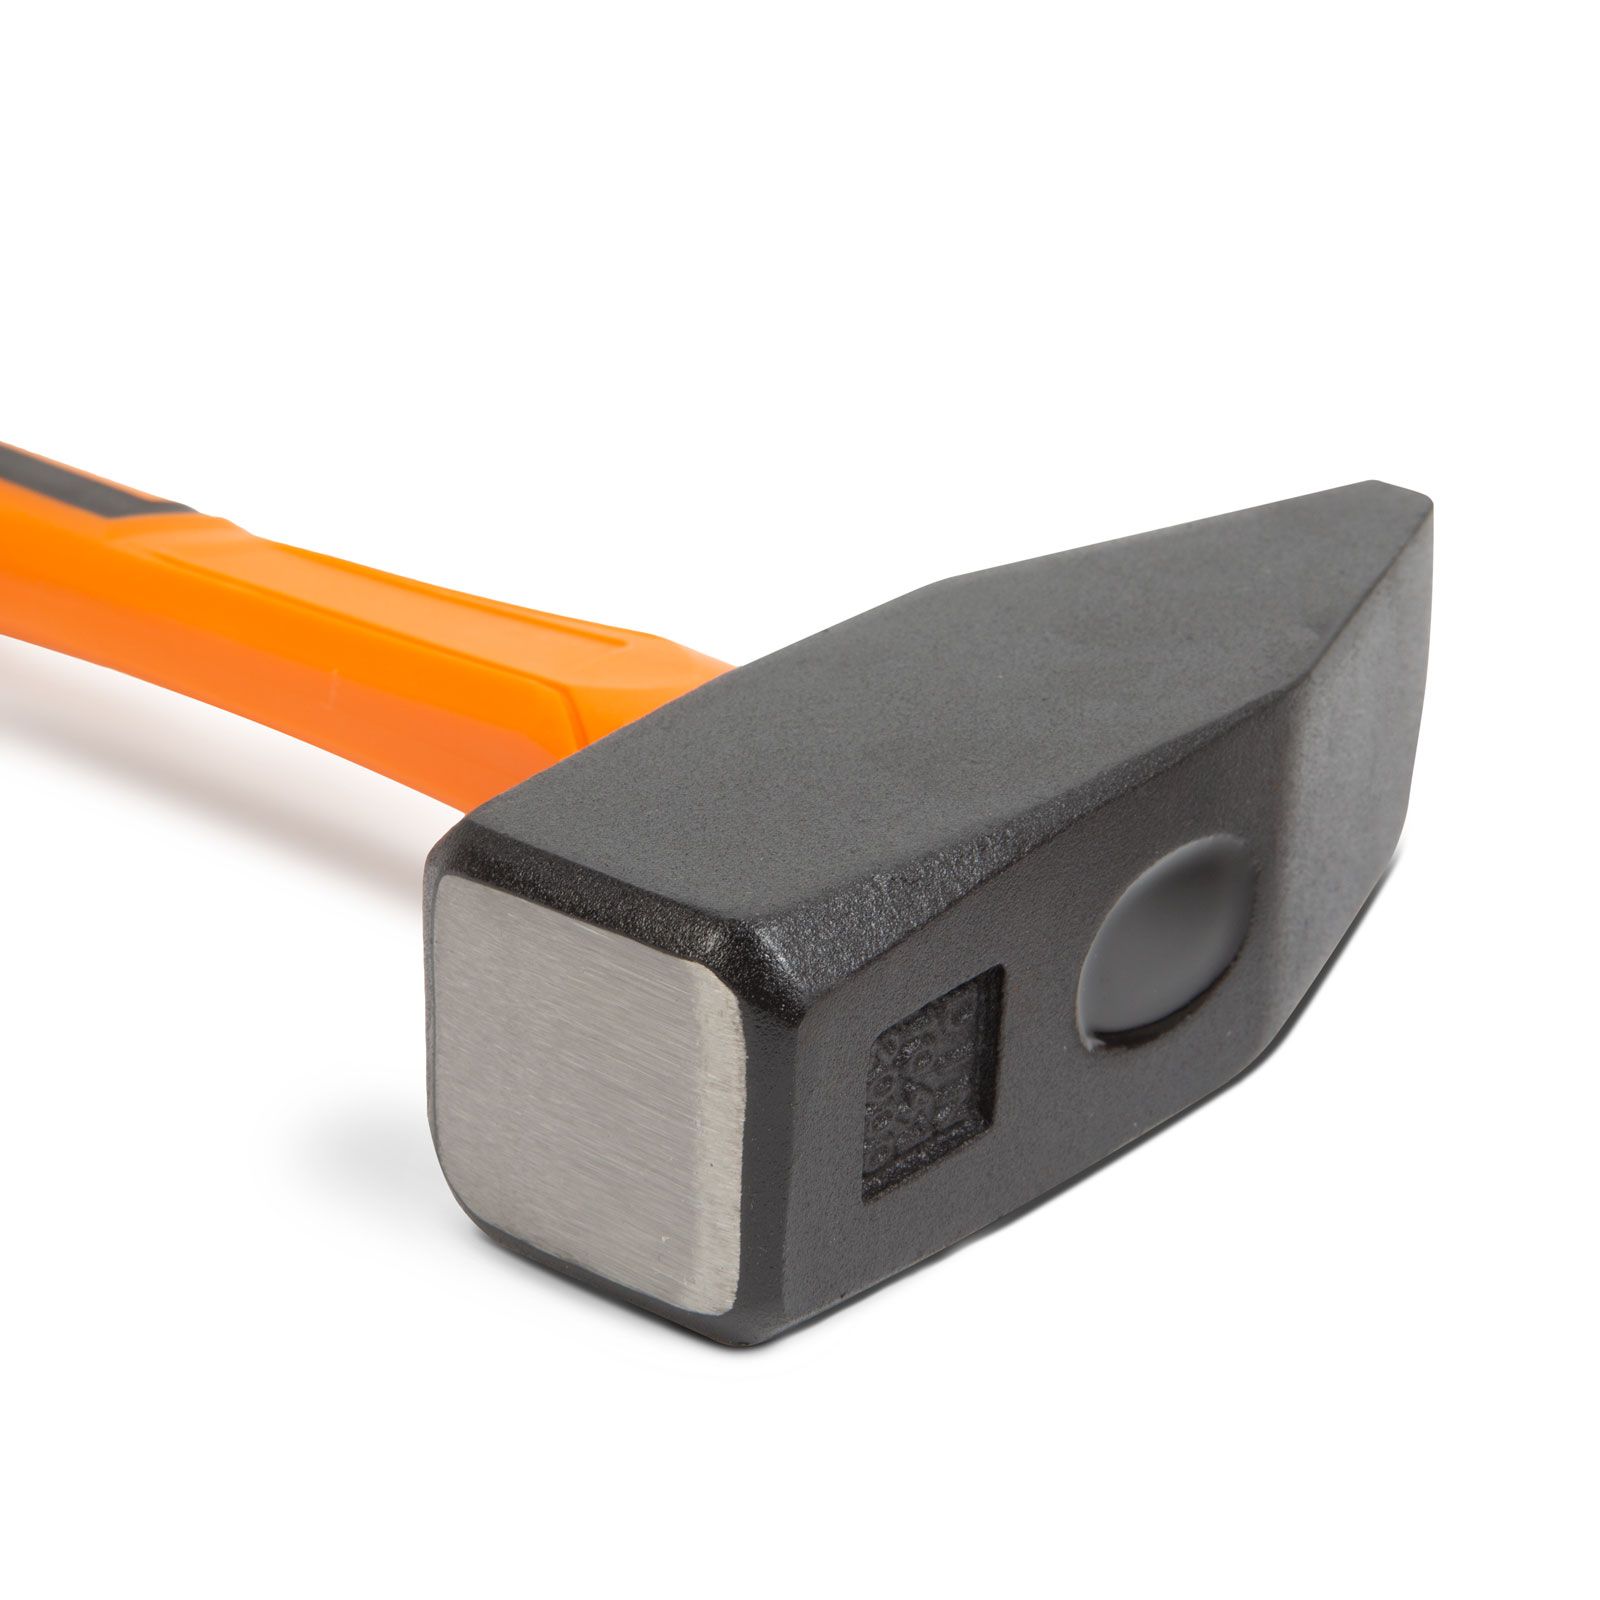 Machinist hammer with fiberglass handle - 2000 g thumb